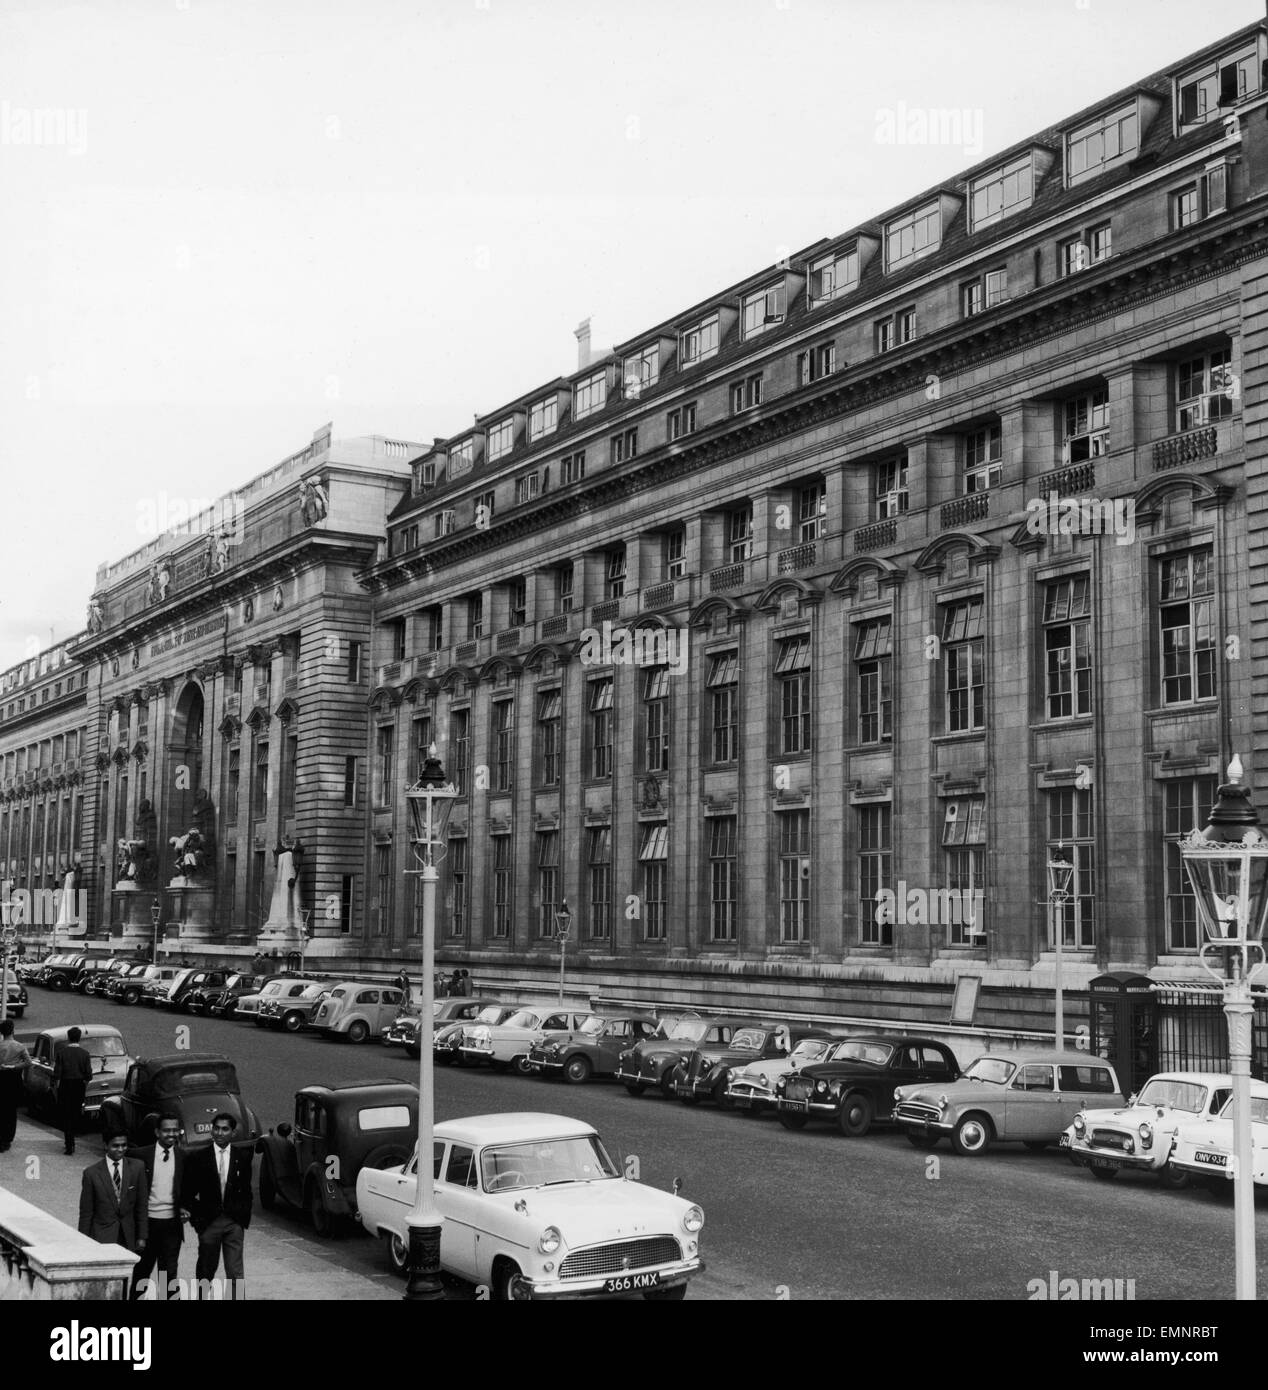 Parken außerhalb des Imperial College of Science und Technologie in South Kensington, London. Ca. 1960. Stockfoto